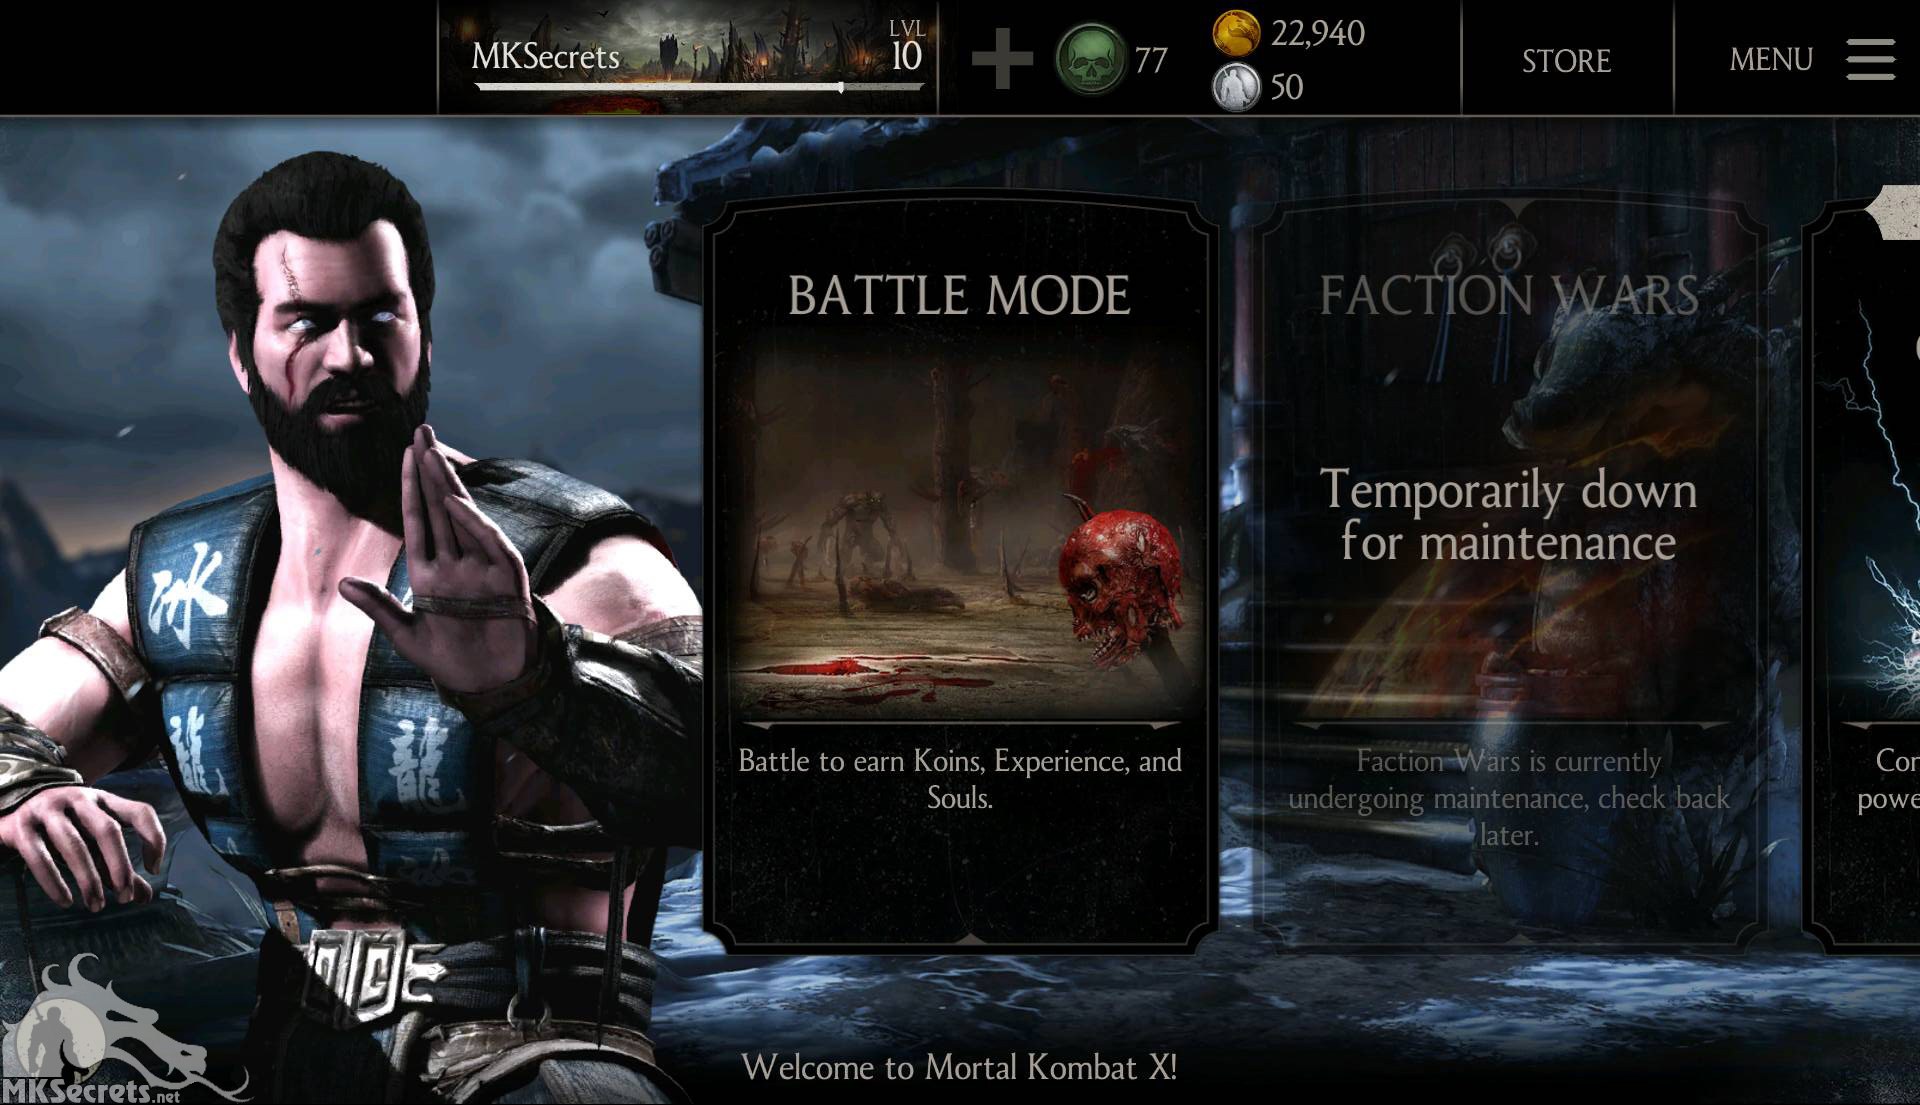 Mkx mobile вк. Меню мортал комбат 10. Mortal Kombat x mobile версия 1.1.0. МК Х мобайл. Mortal Kombat 10 главное меню.